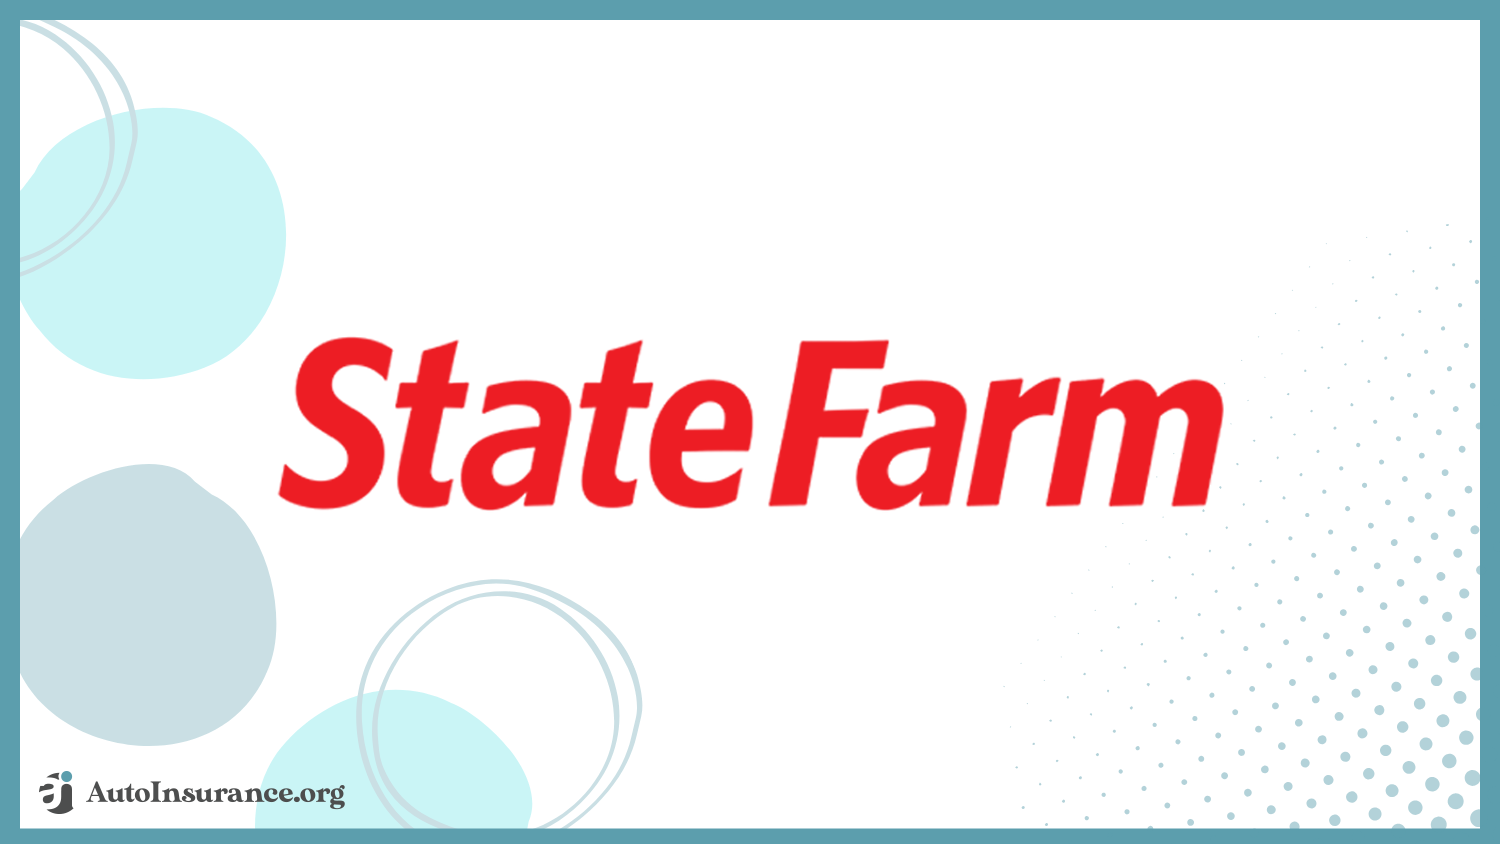 Best Scion tC Auto Insurance: State Farm